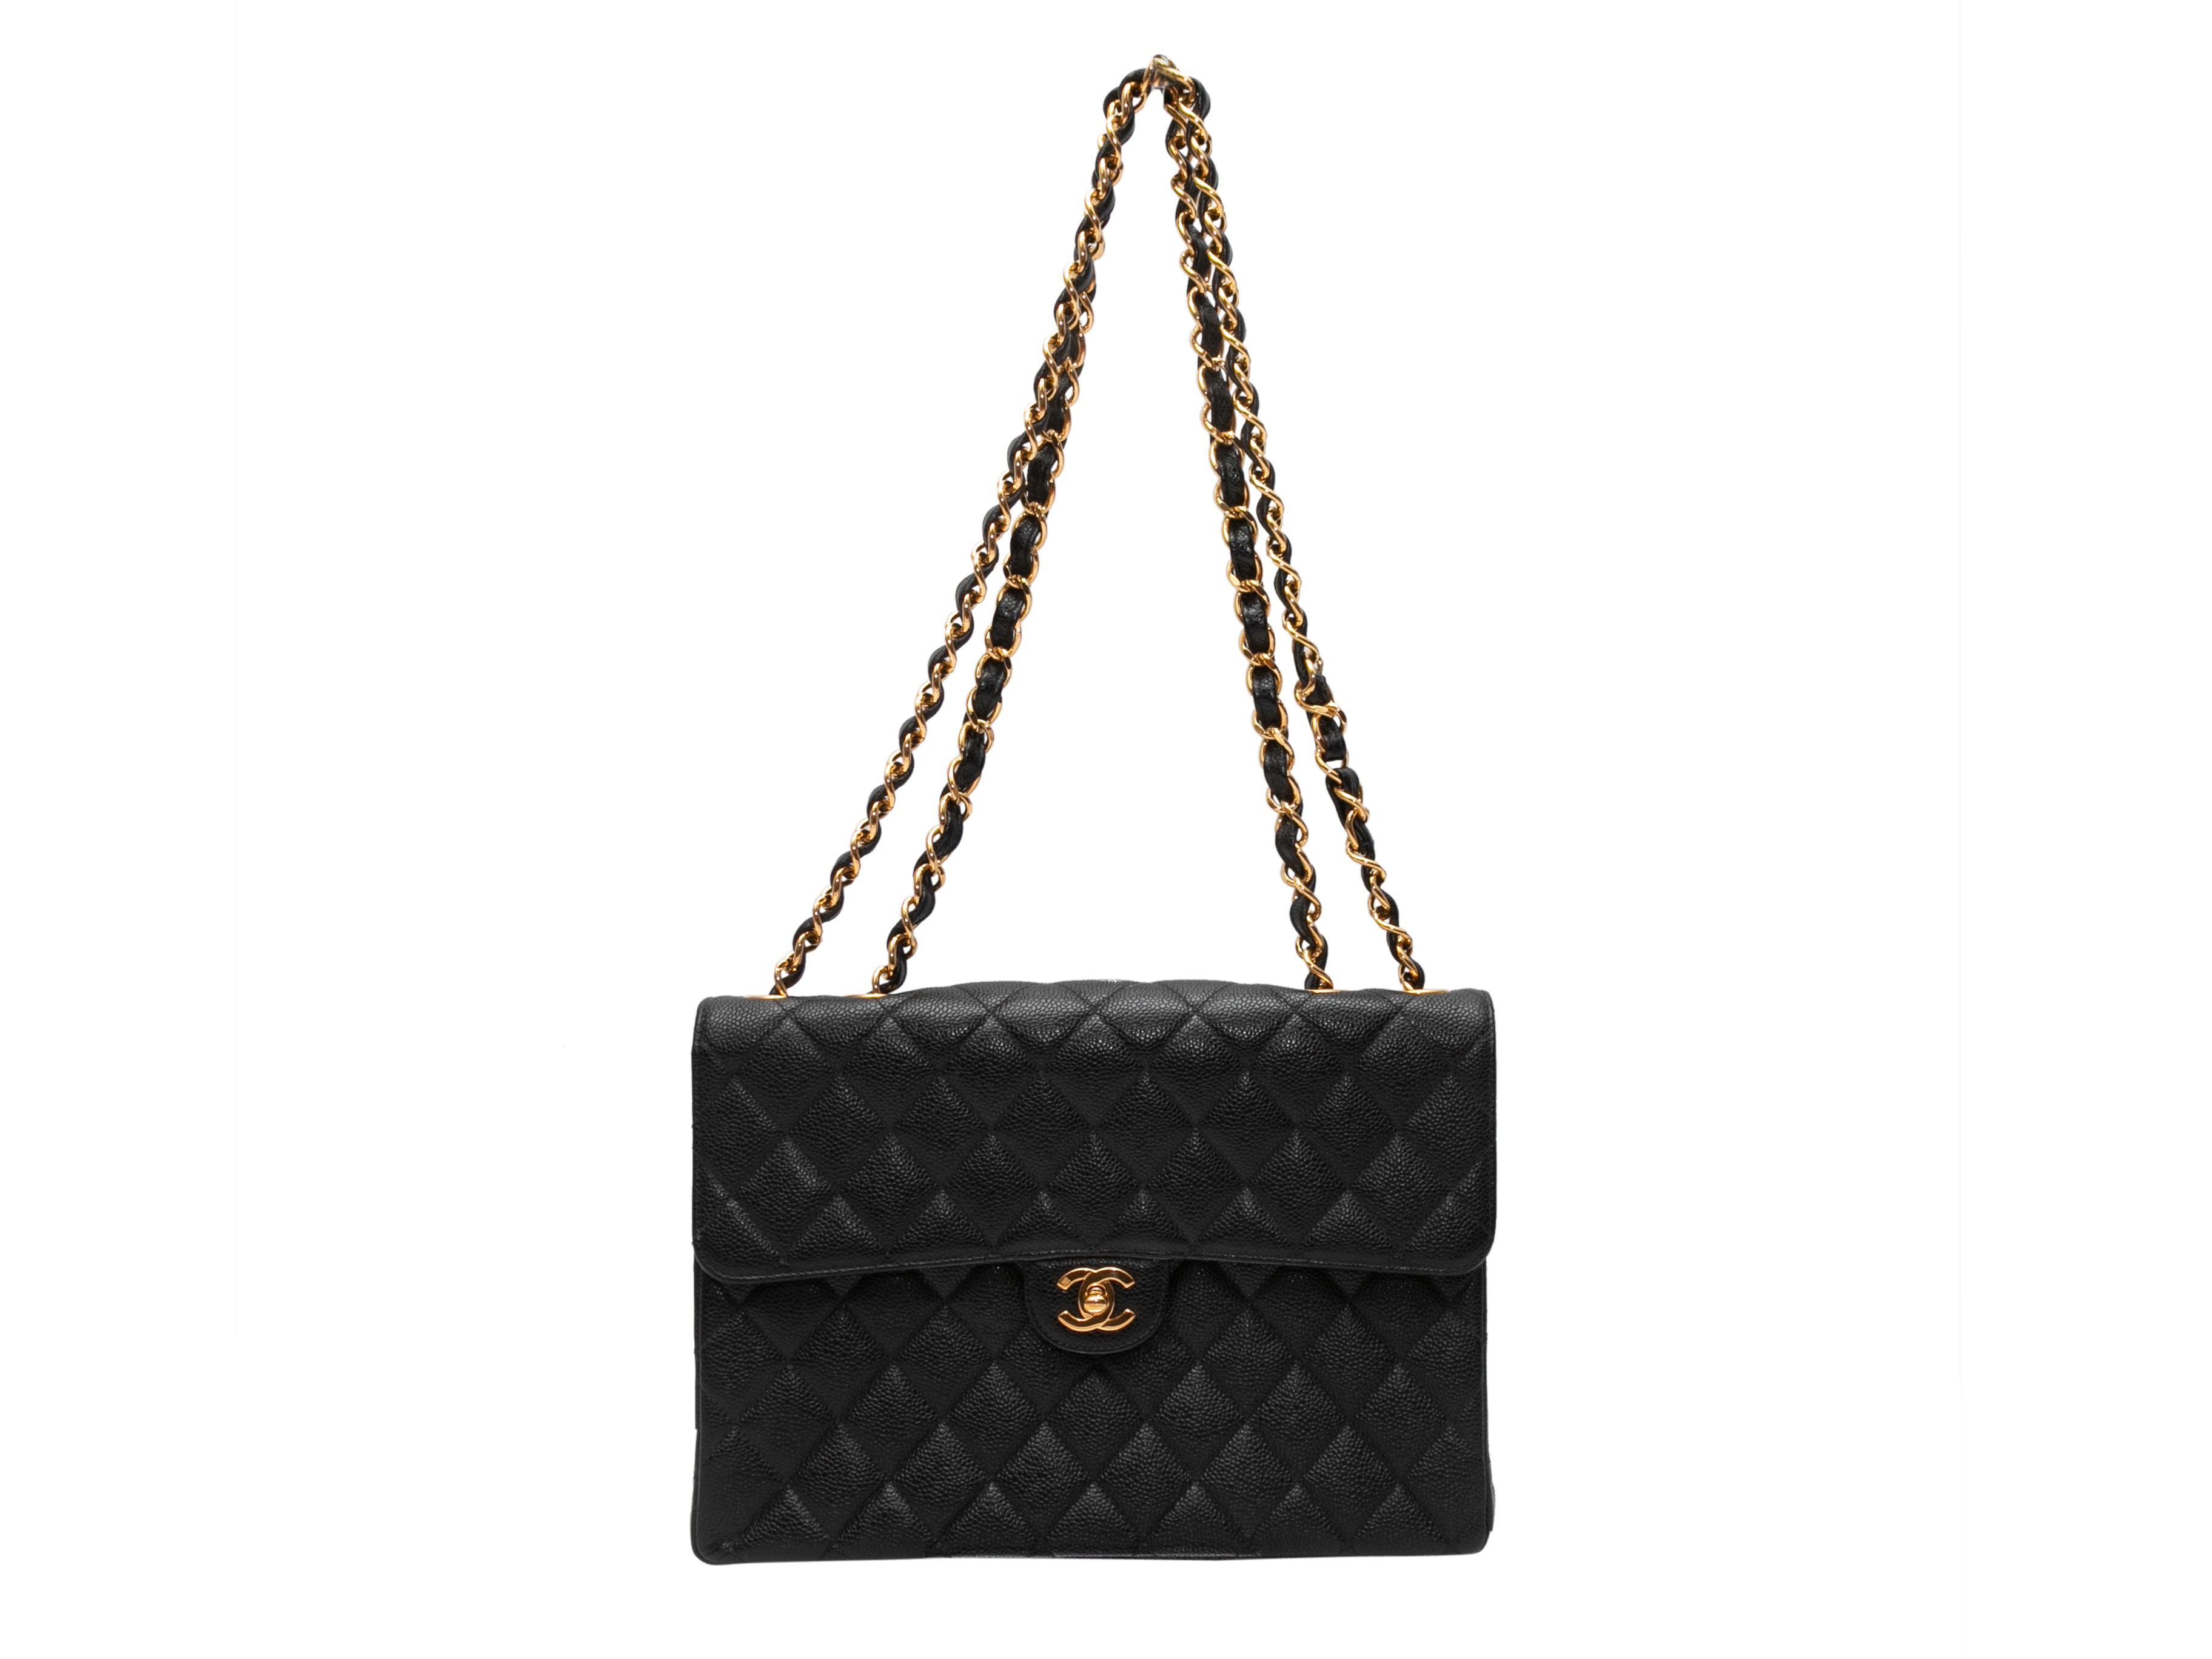 Chanel Jumbo Caviar Double Flap Bag